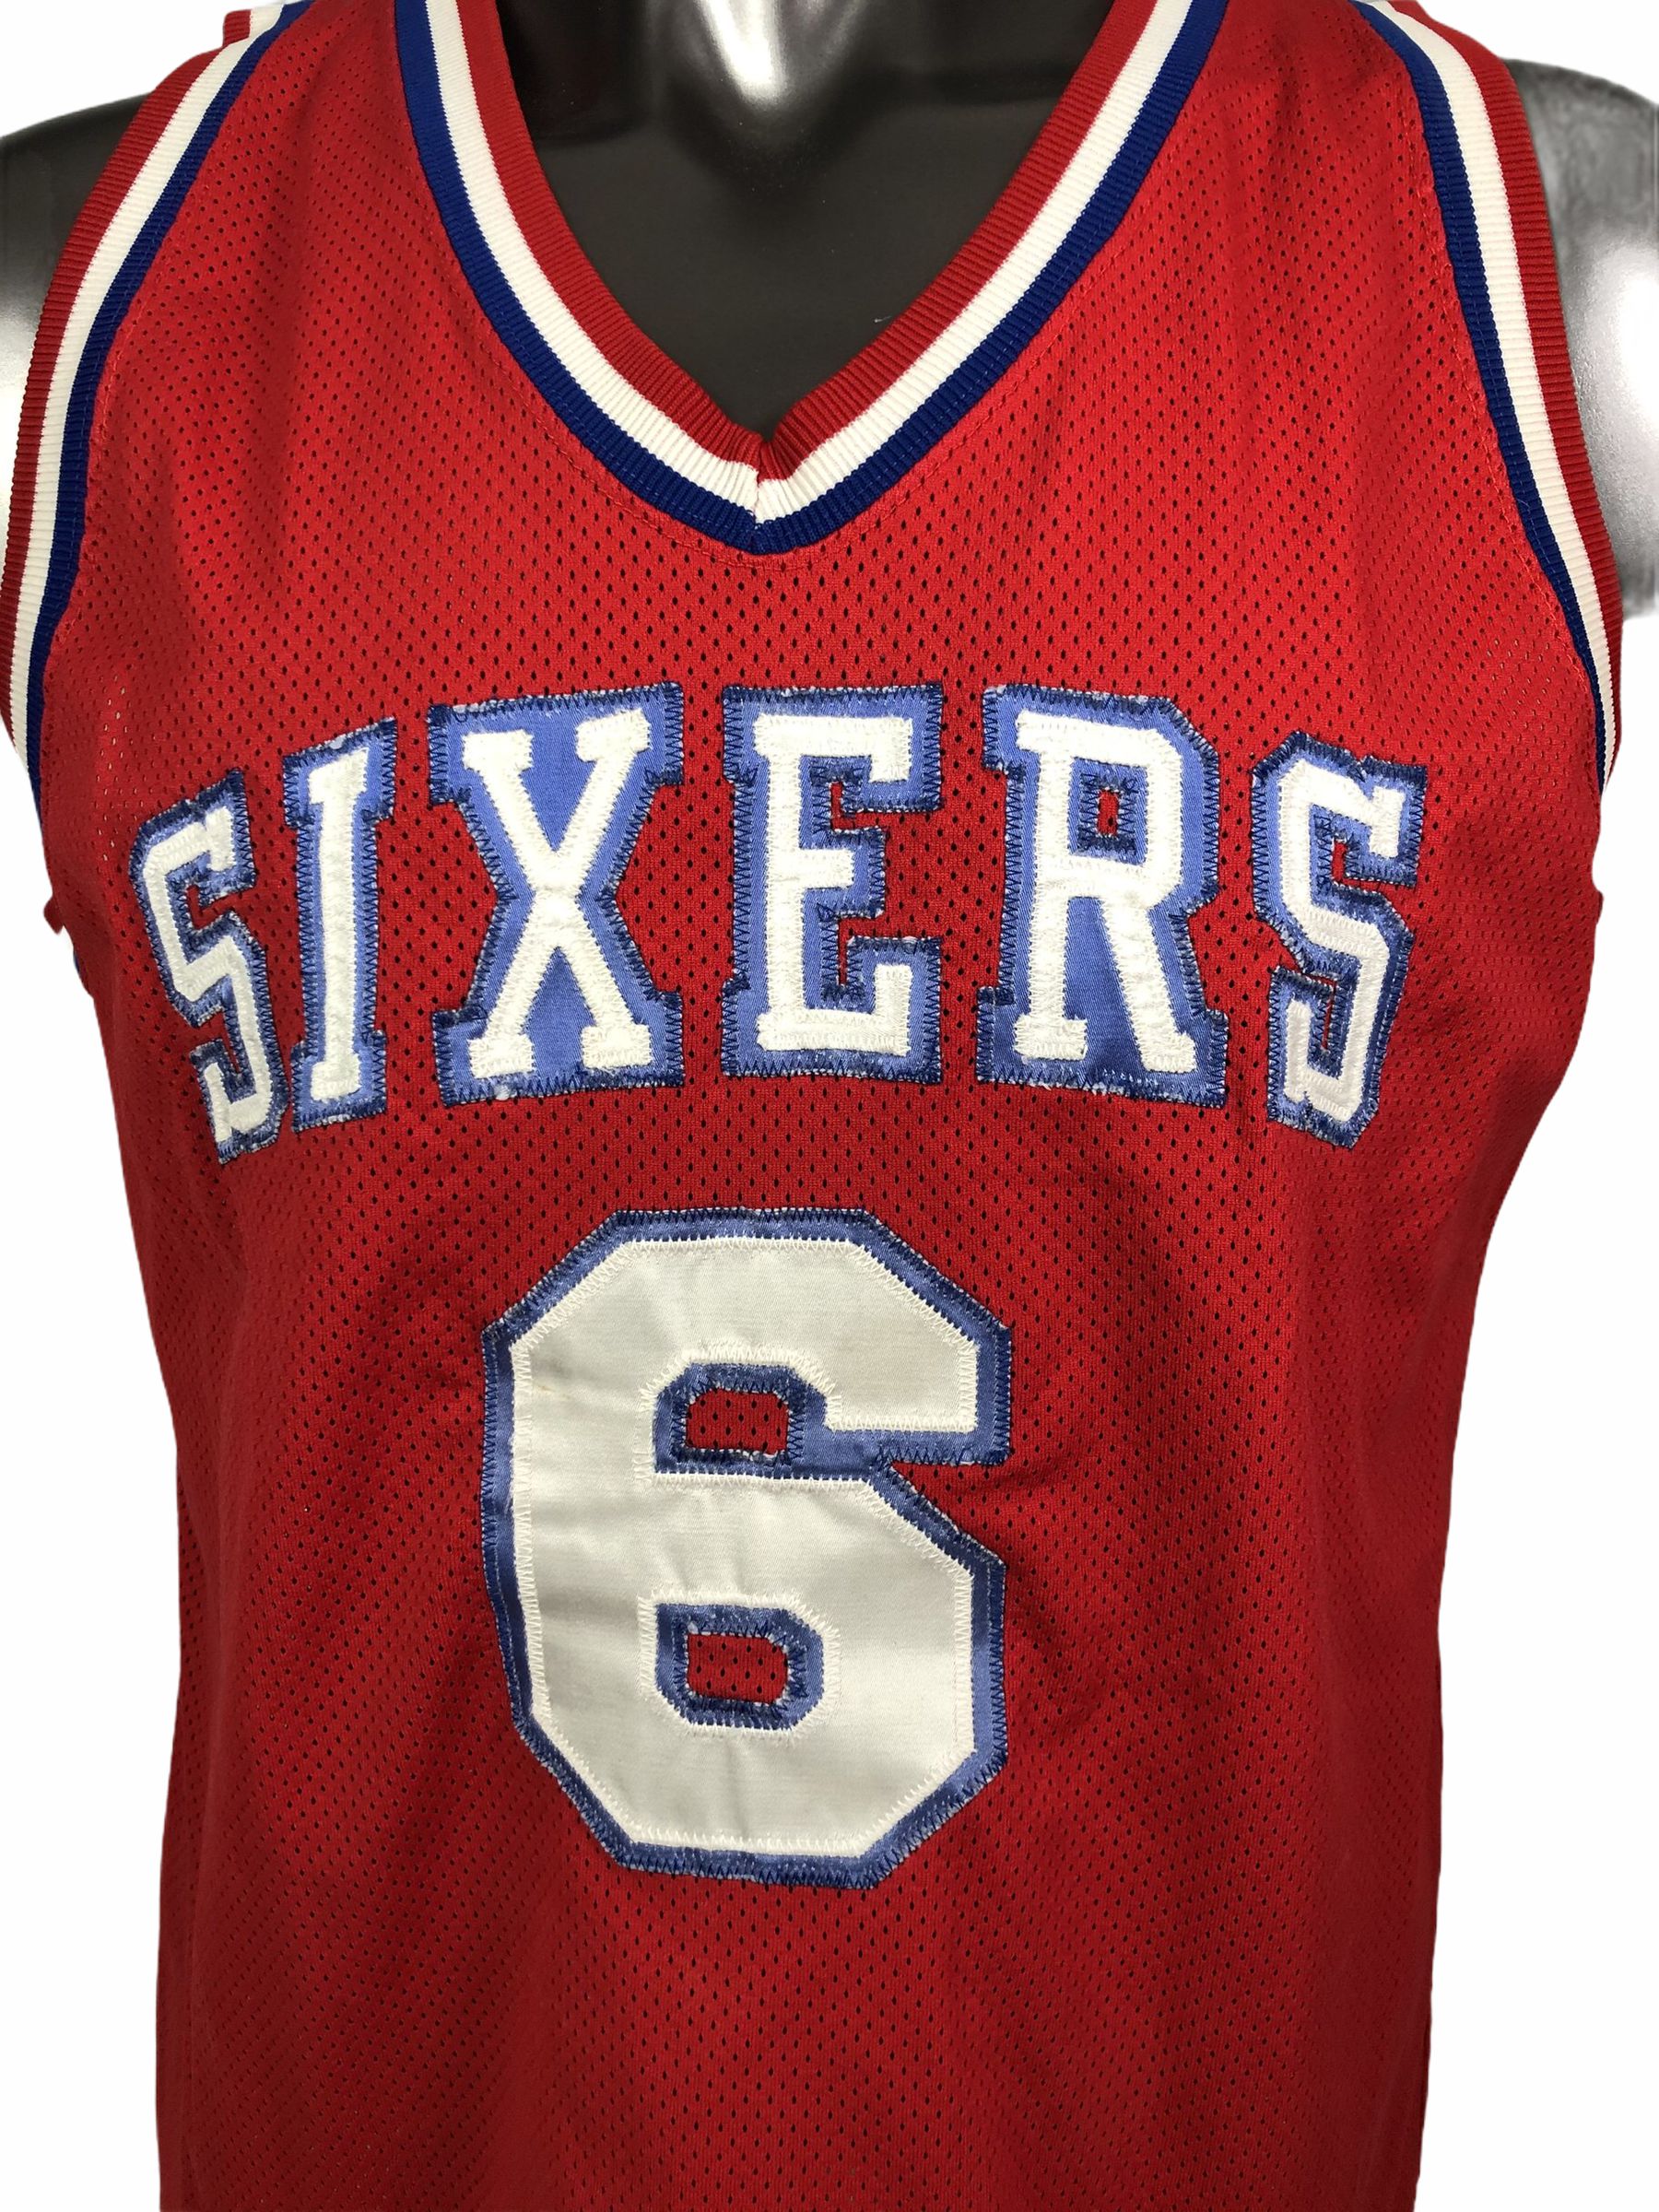 Vintage NBA Houston Rockets Tee Shirt 1980s Size Medium Made in USA